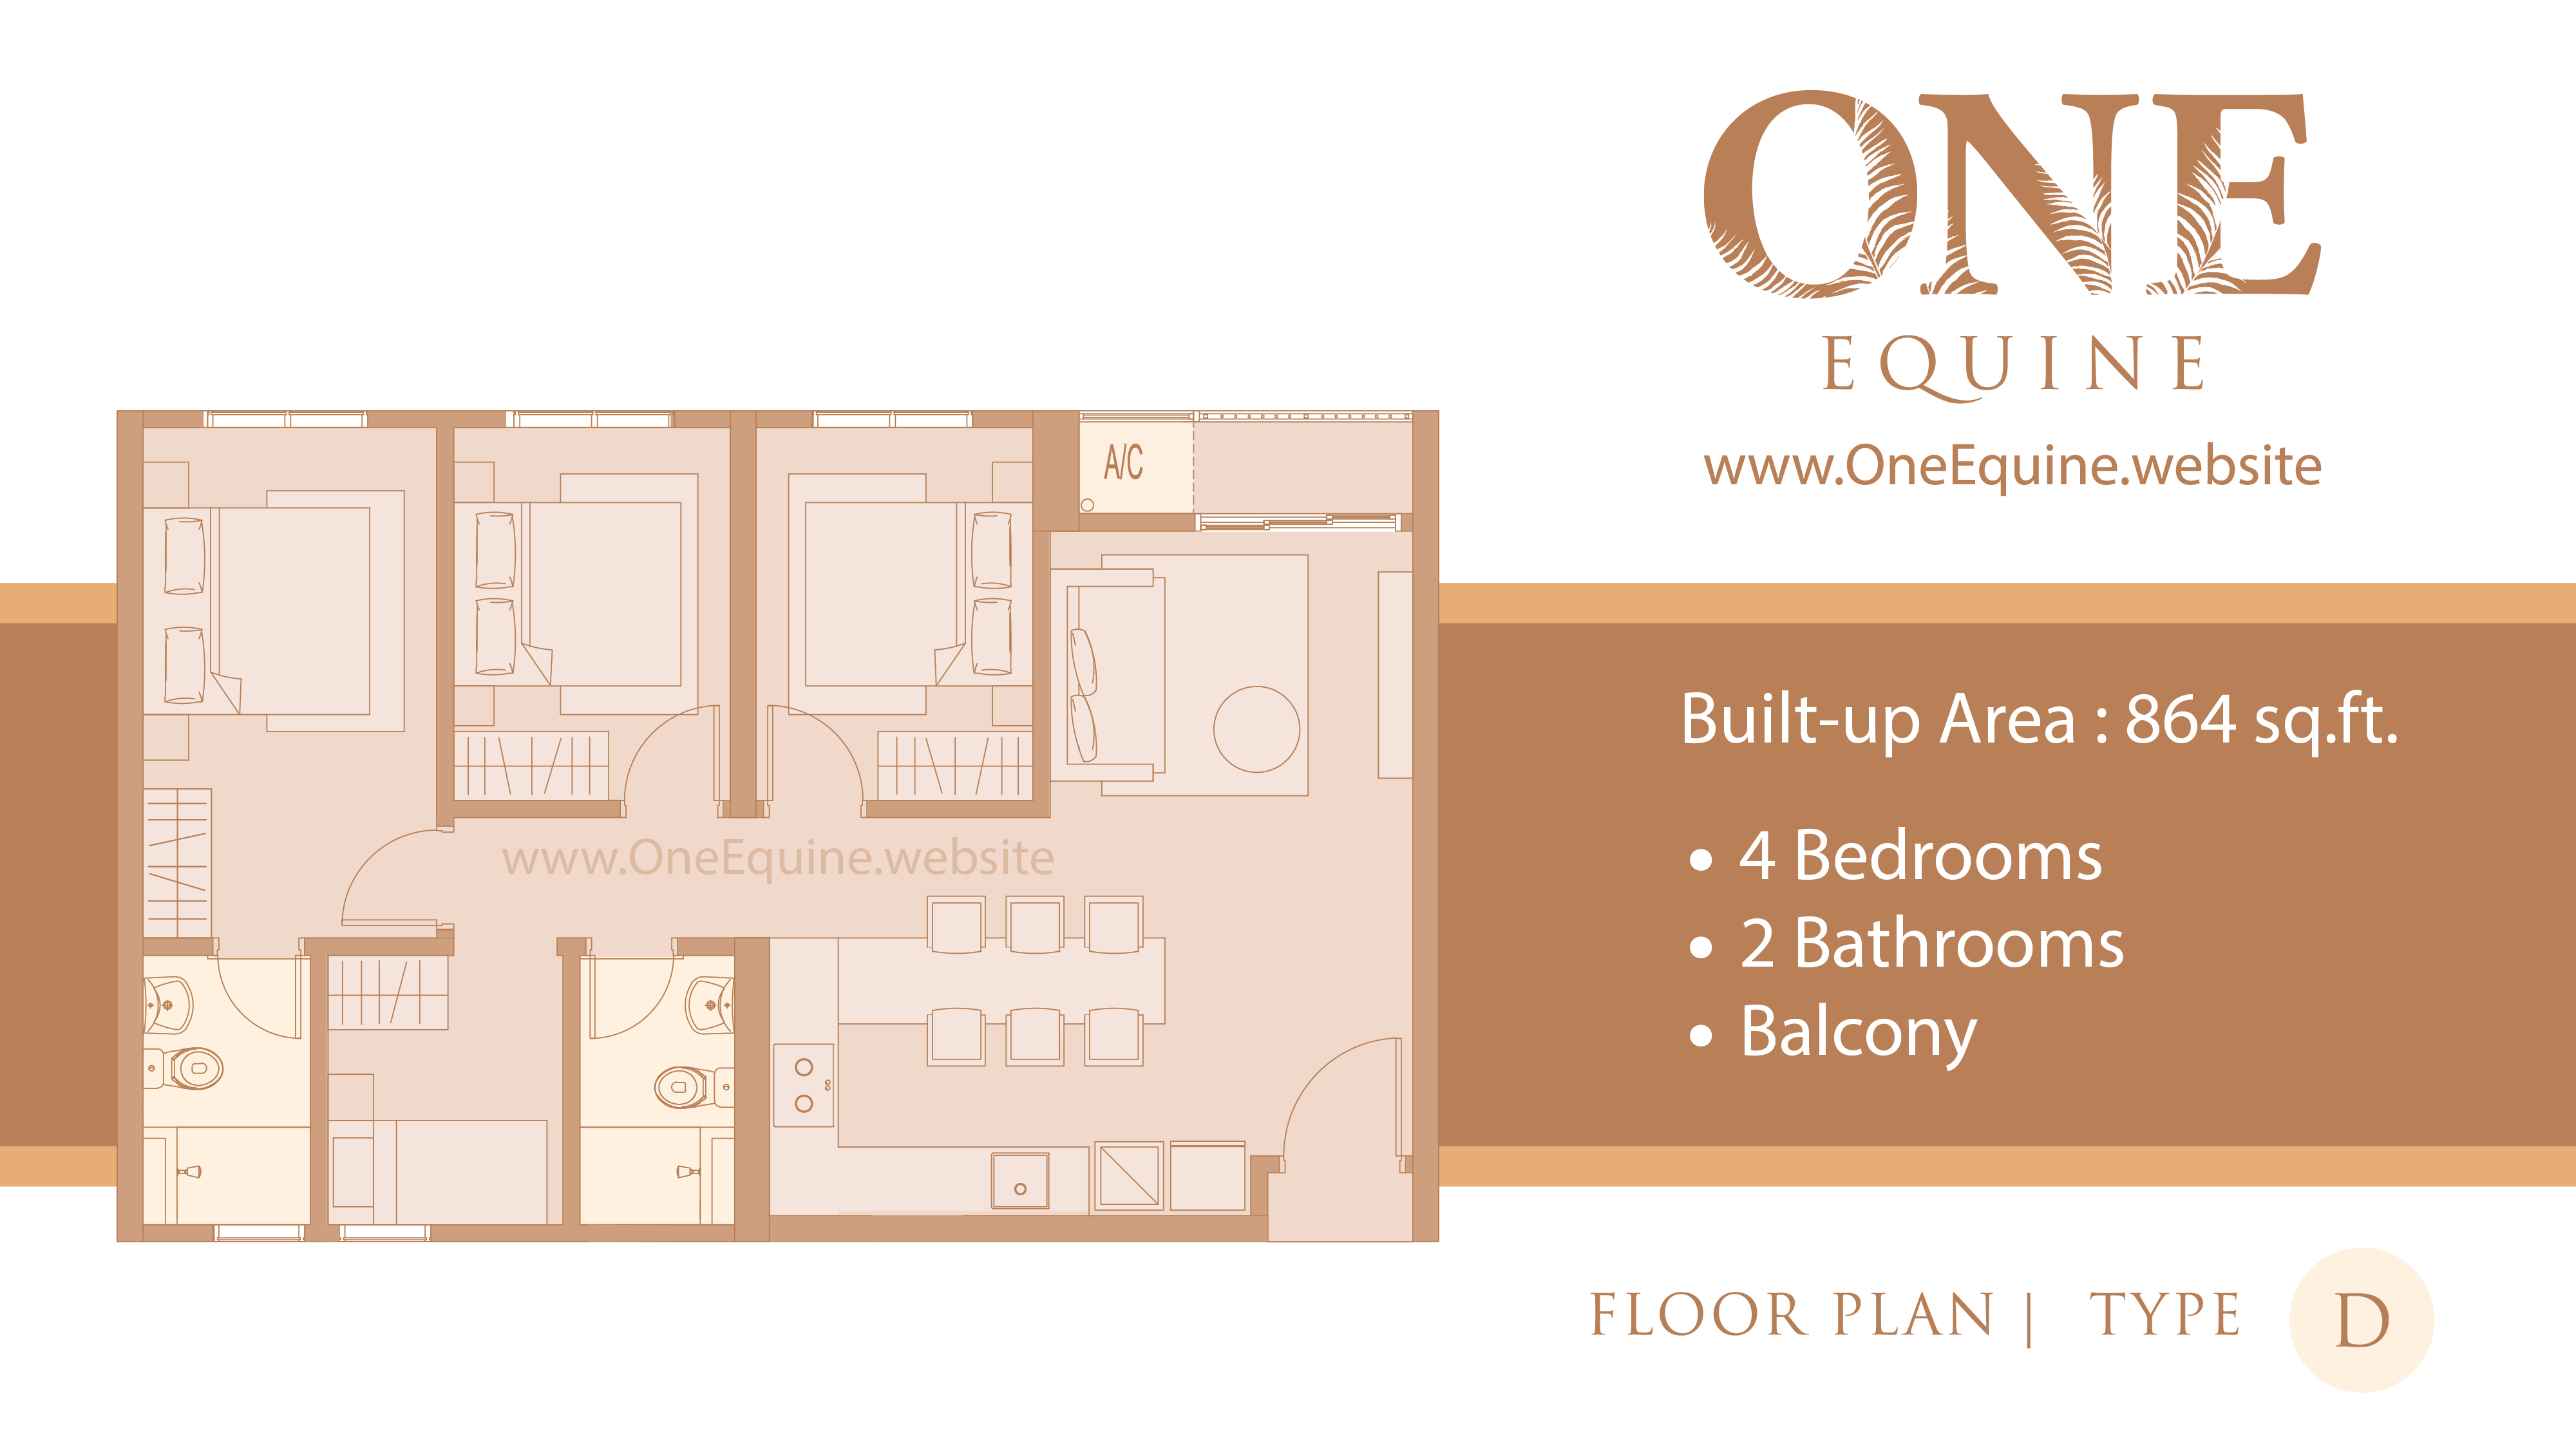 One Equine Park Seri Kembangan - Serviced Apartment 4 Bedrooms 2 Bathrooms Balcony - Floor Plan Type D - 864 sqft